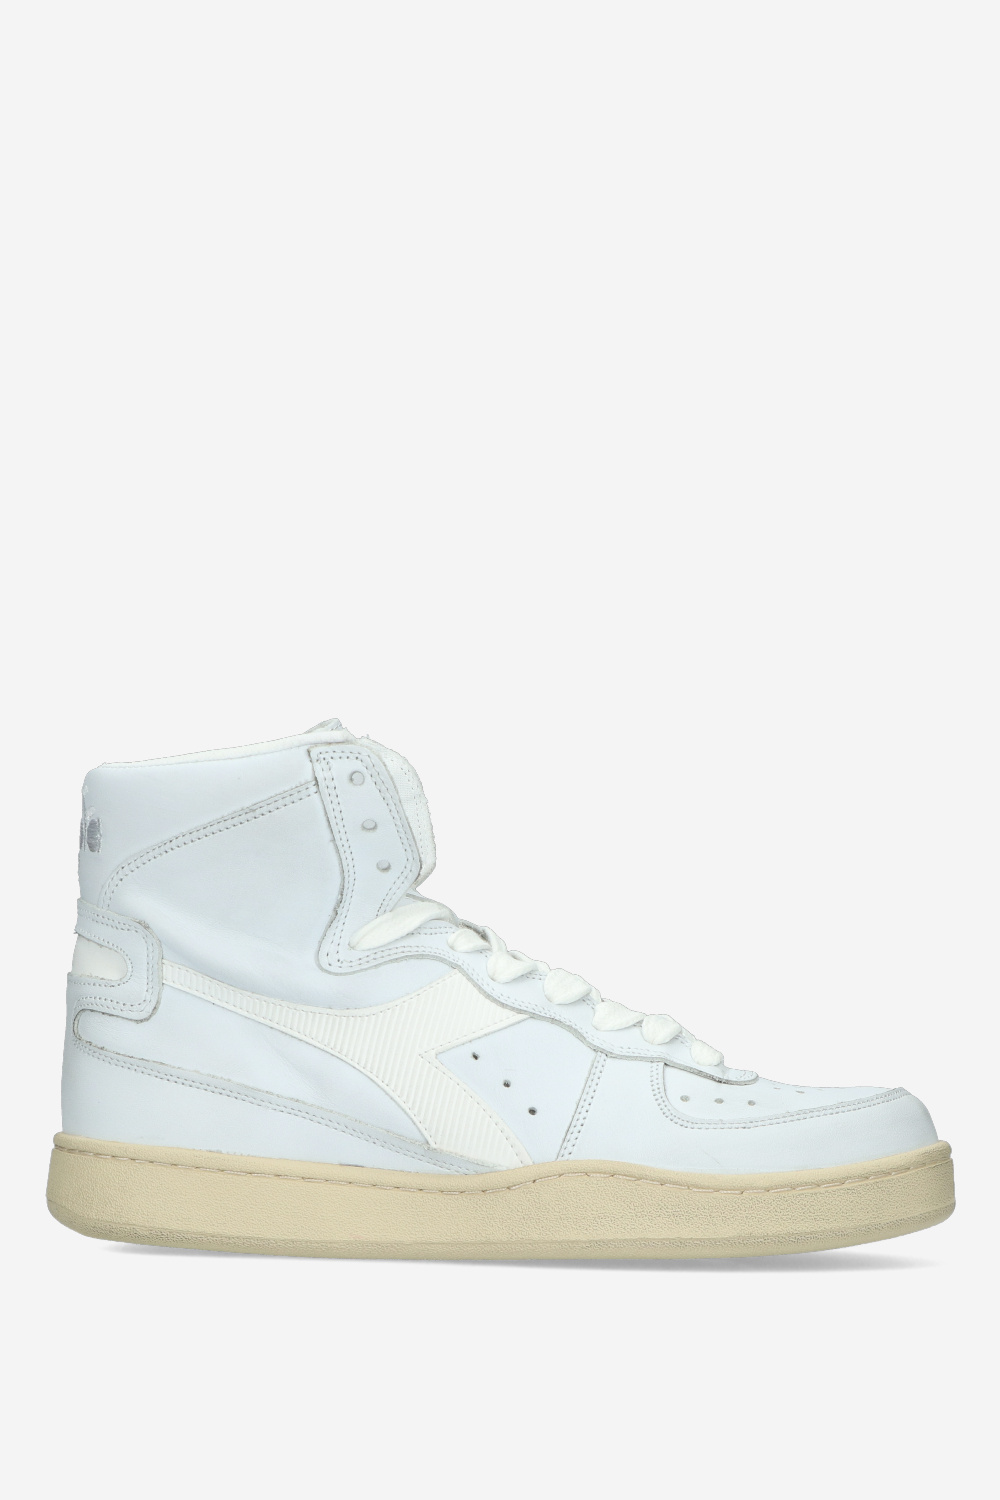 Diadora Sneaker White